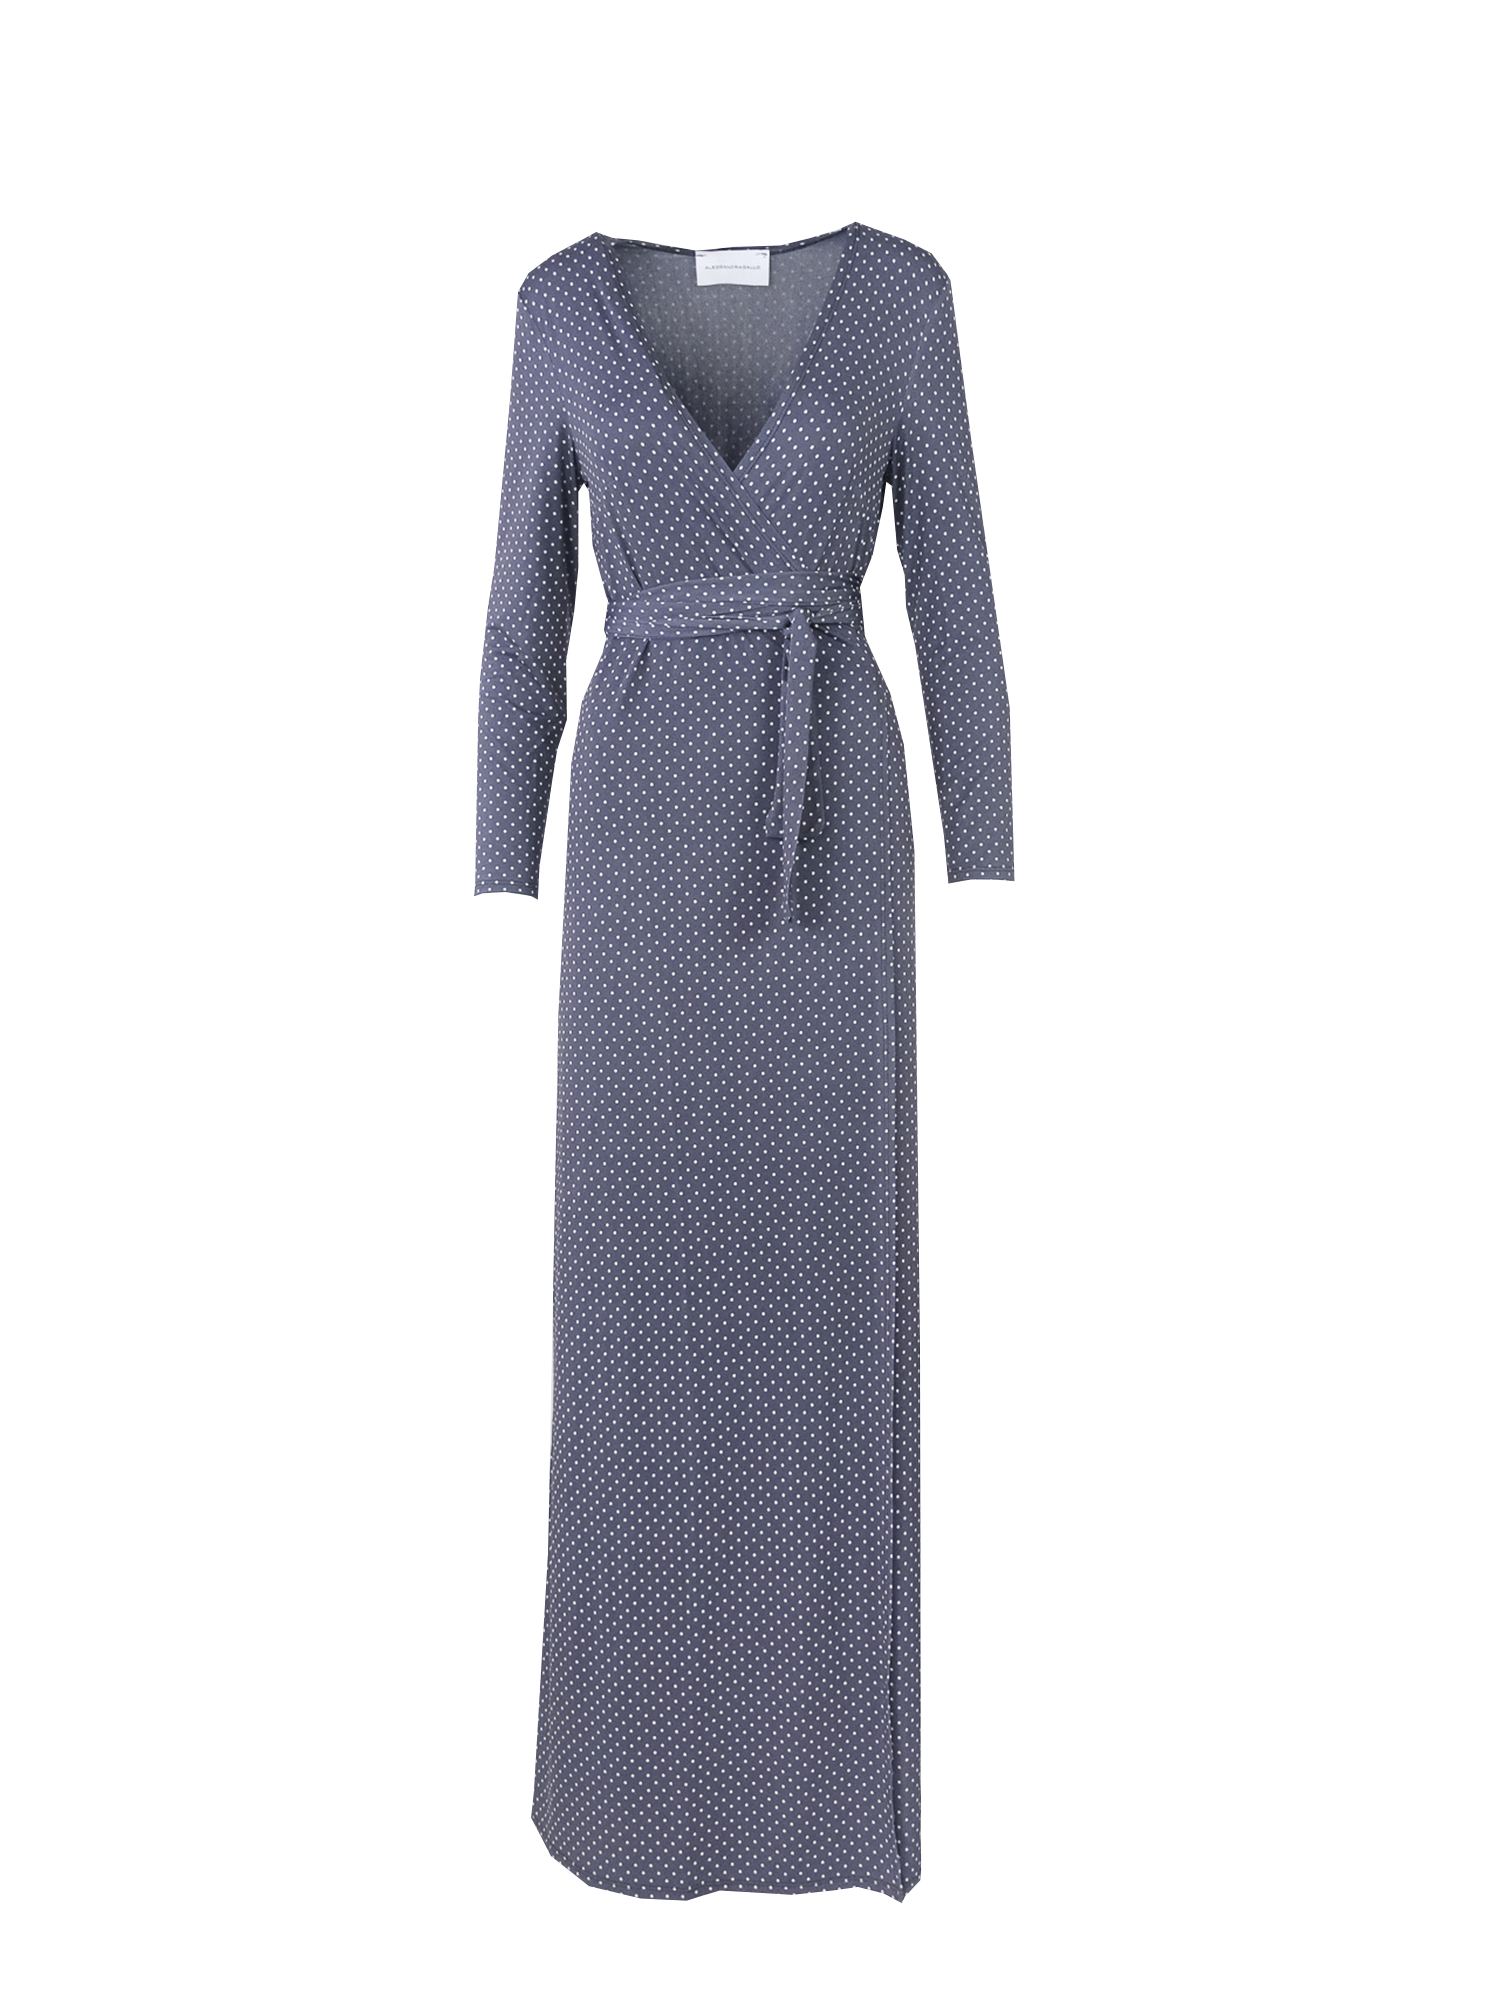 LETIZIA - long wraparound dress with sleeves in print pois lycra